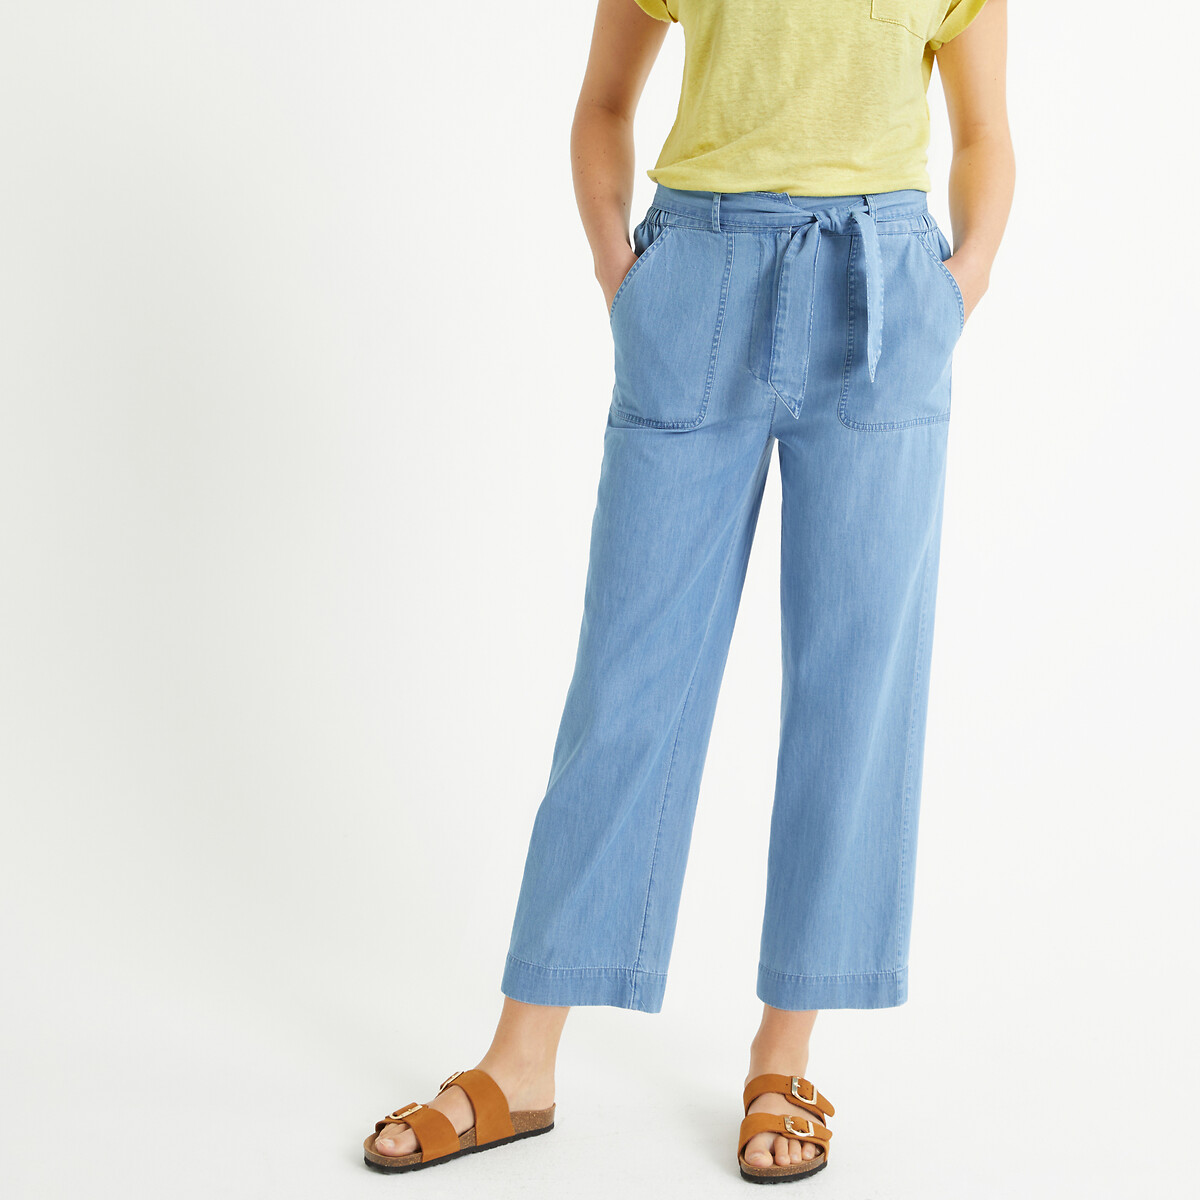 Image of Wide Leg Jeans in Lightweight Denim, Length 25"